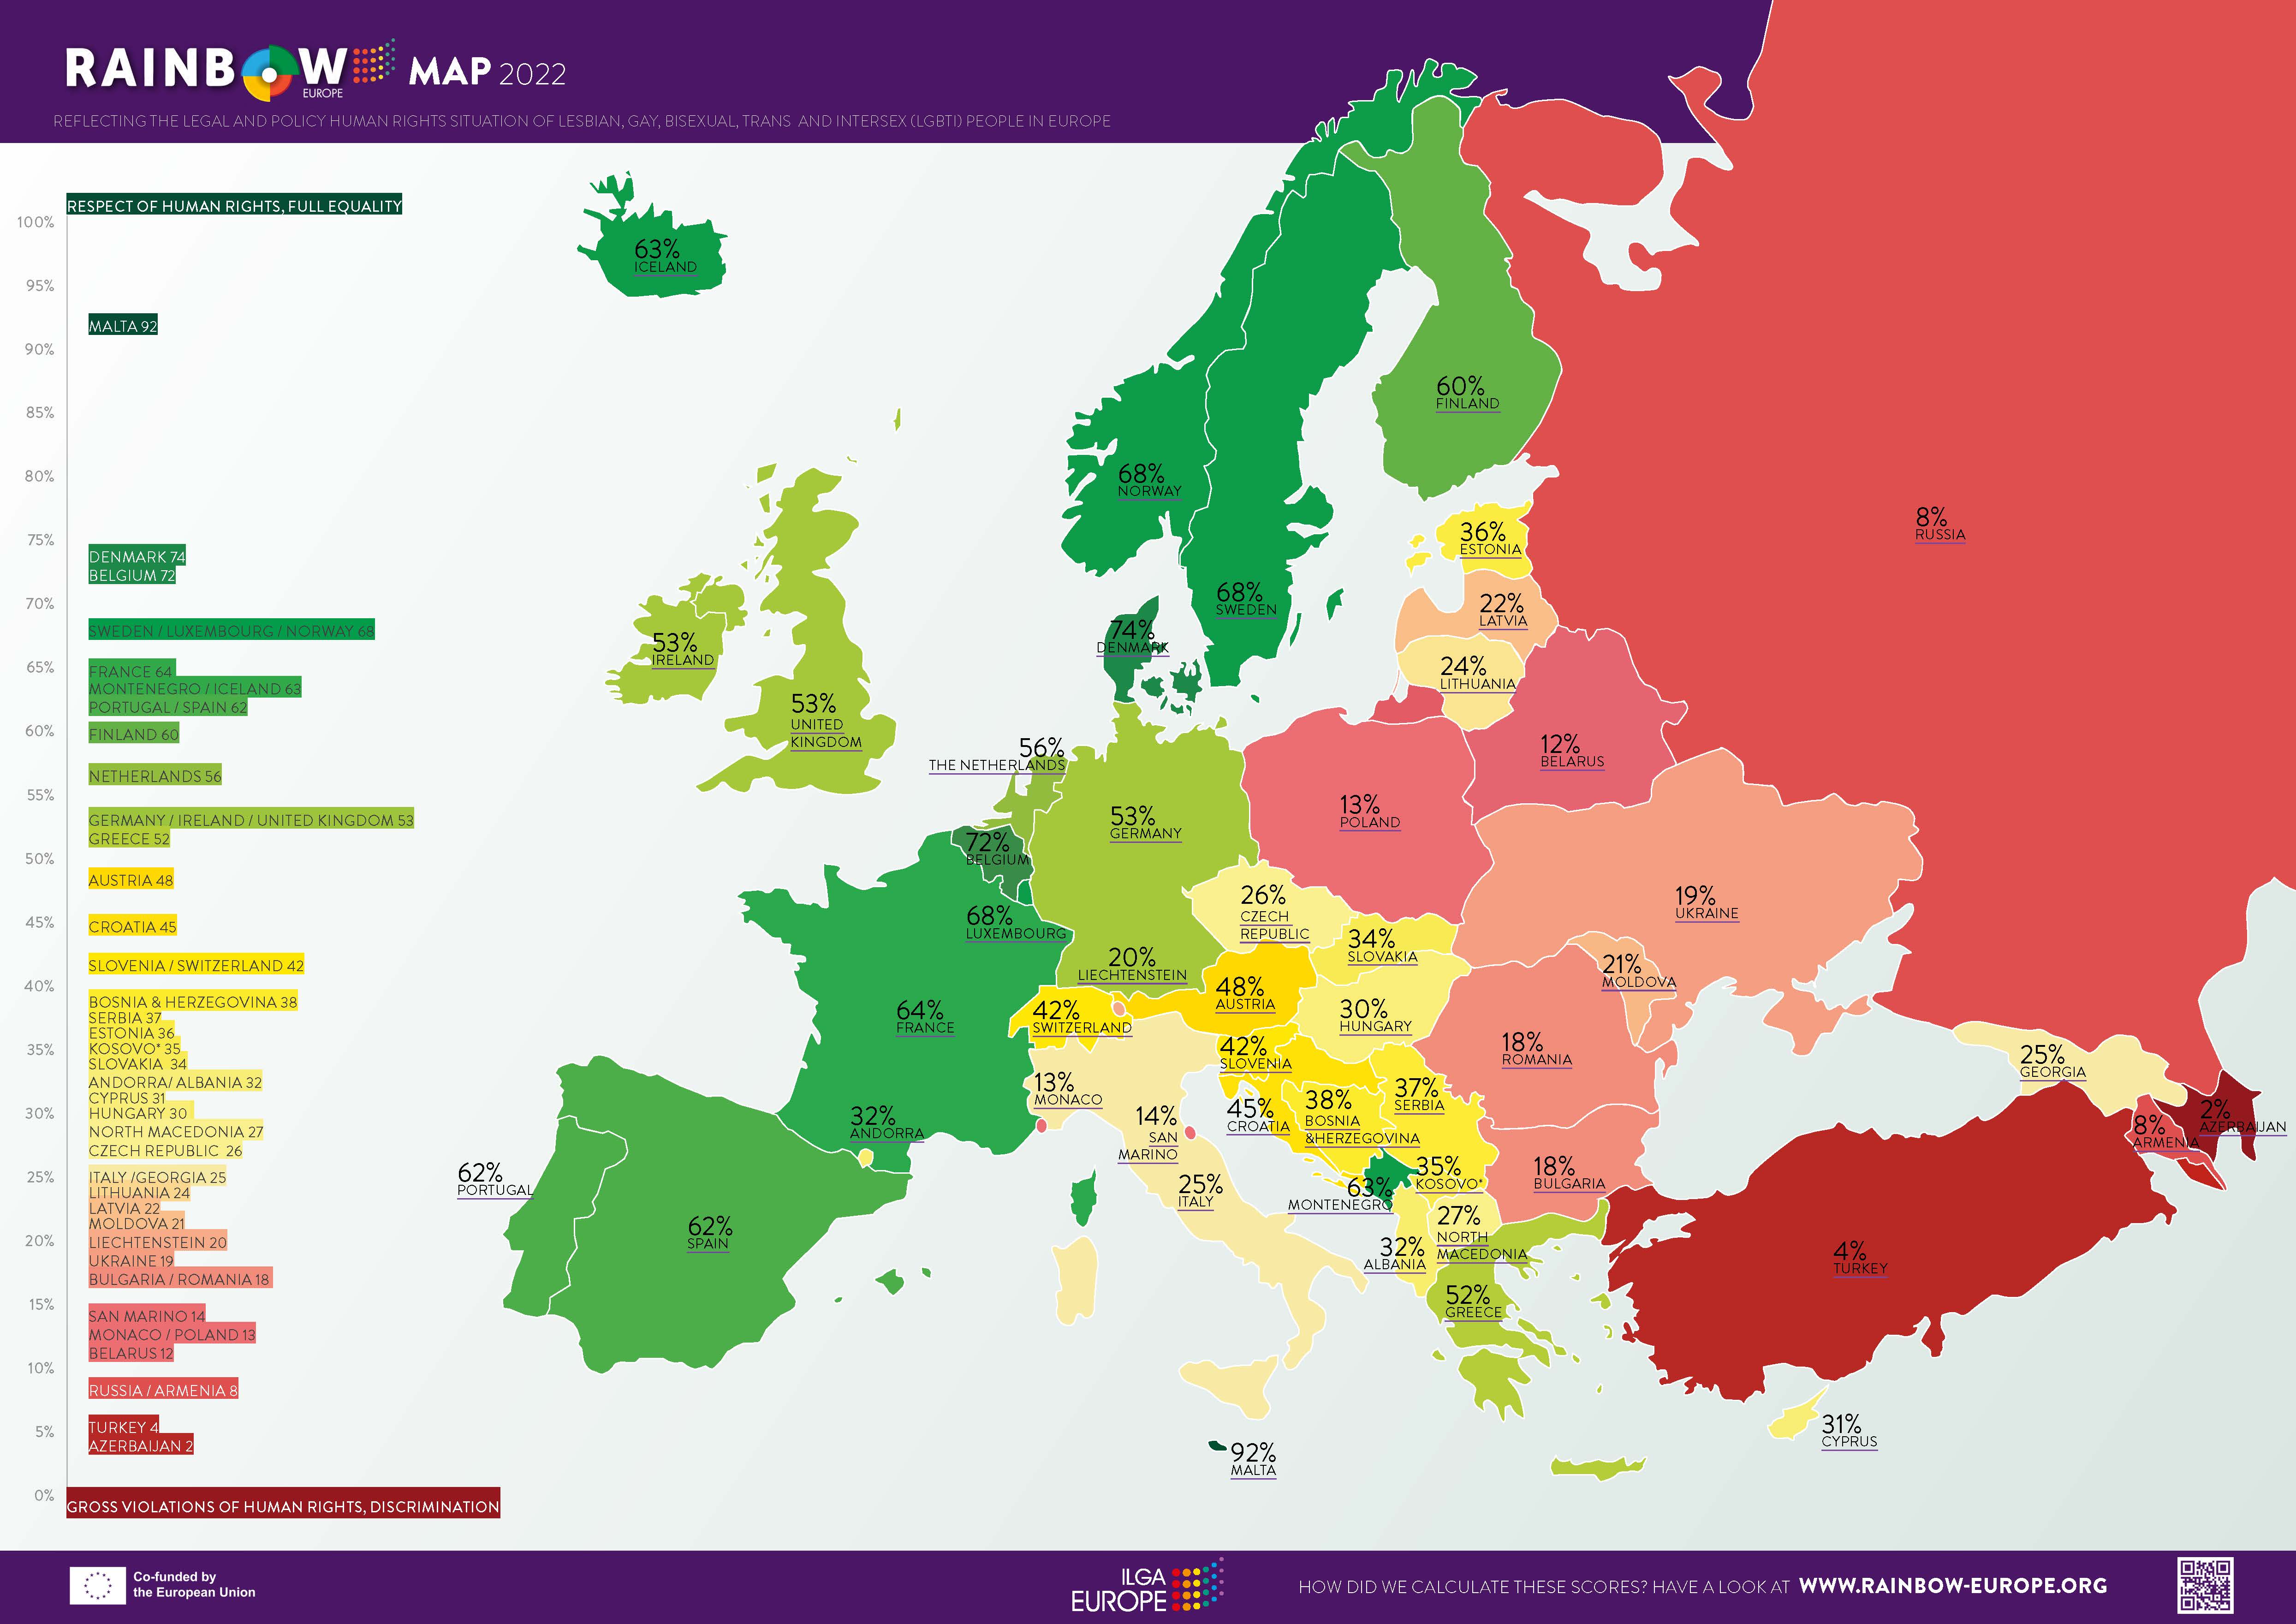 ILGA-Europe's Rainbow Map 2022